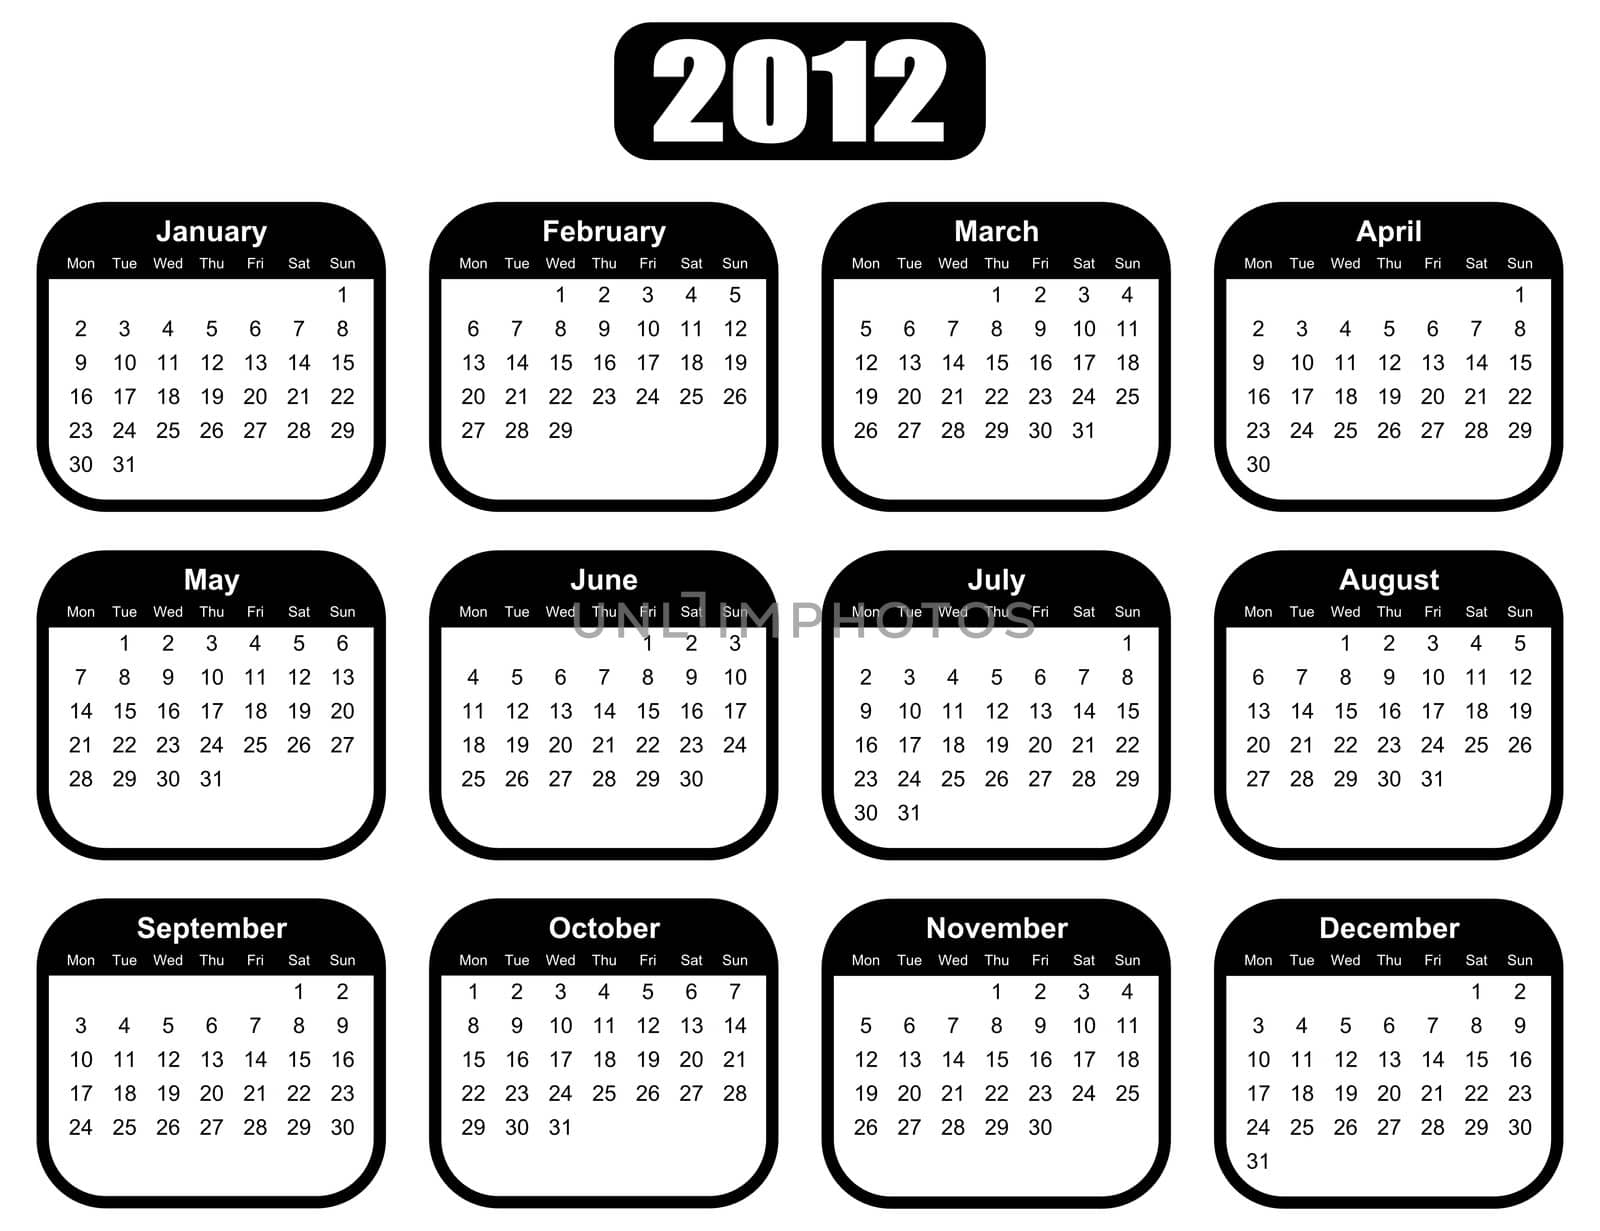 calendar for 2012 year by alexwhite